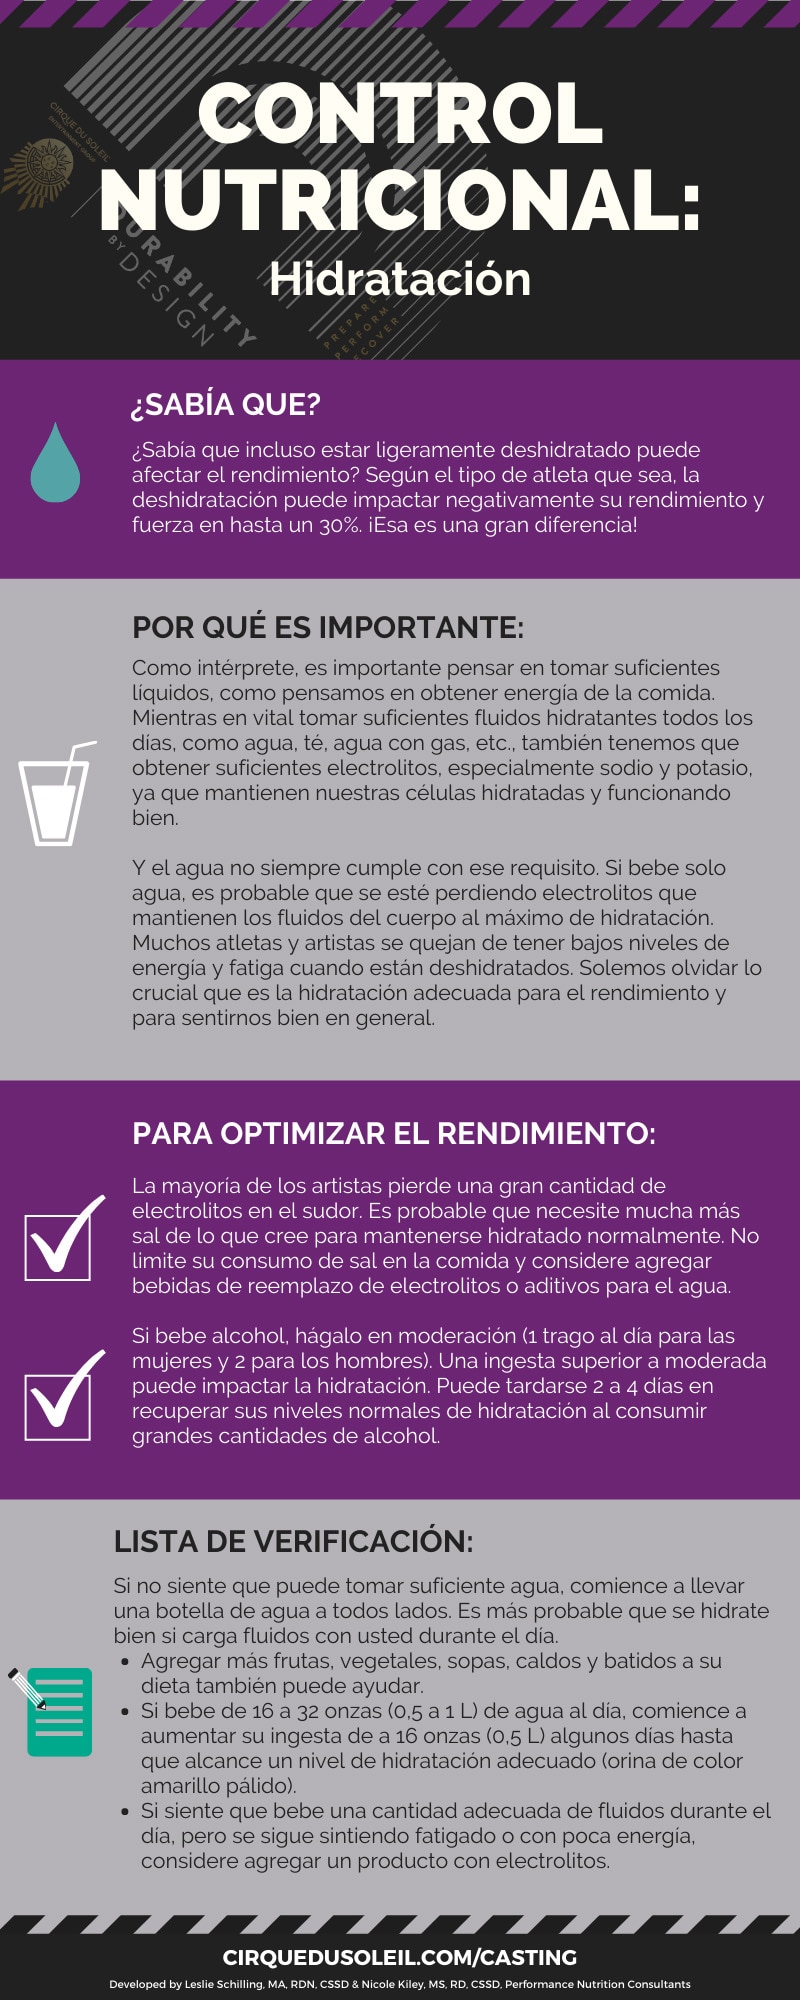 Infografia Control nutricional: Hidratación